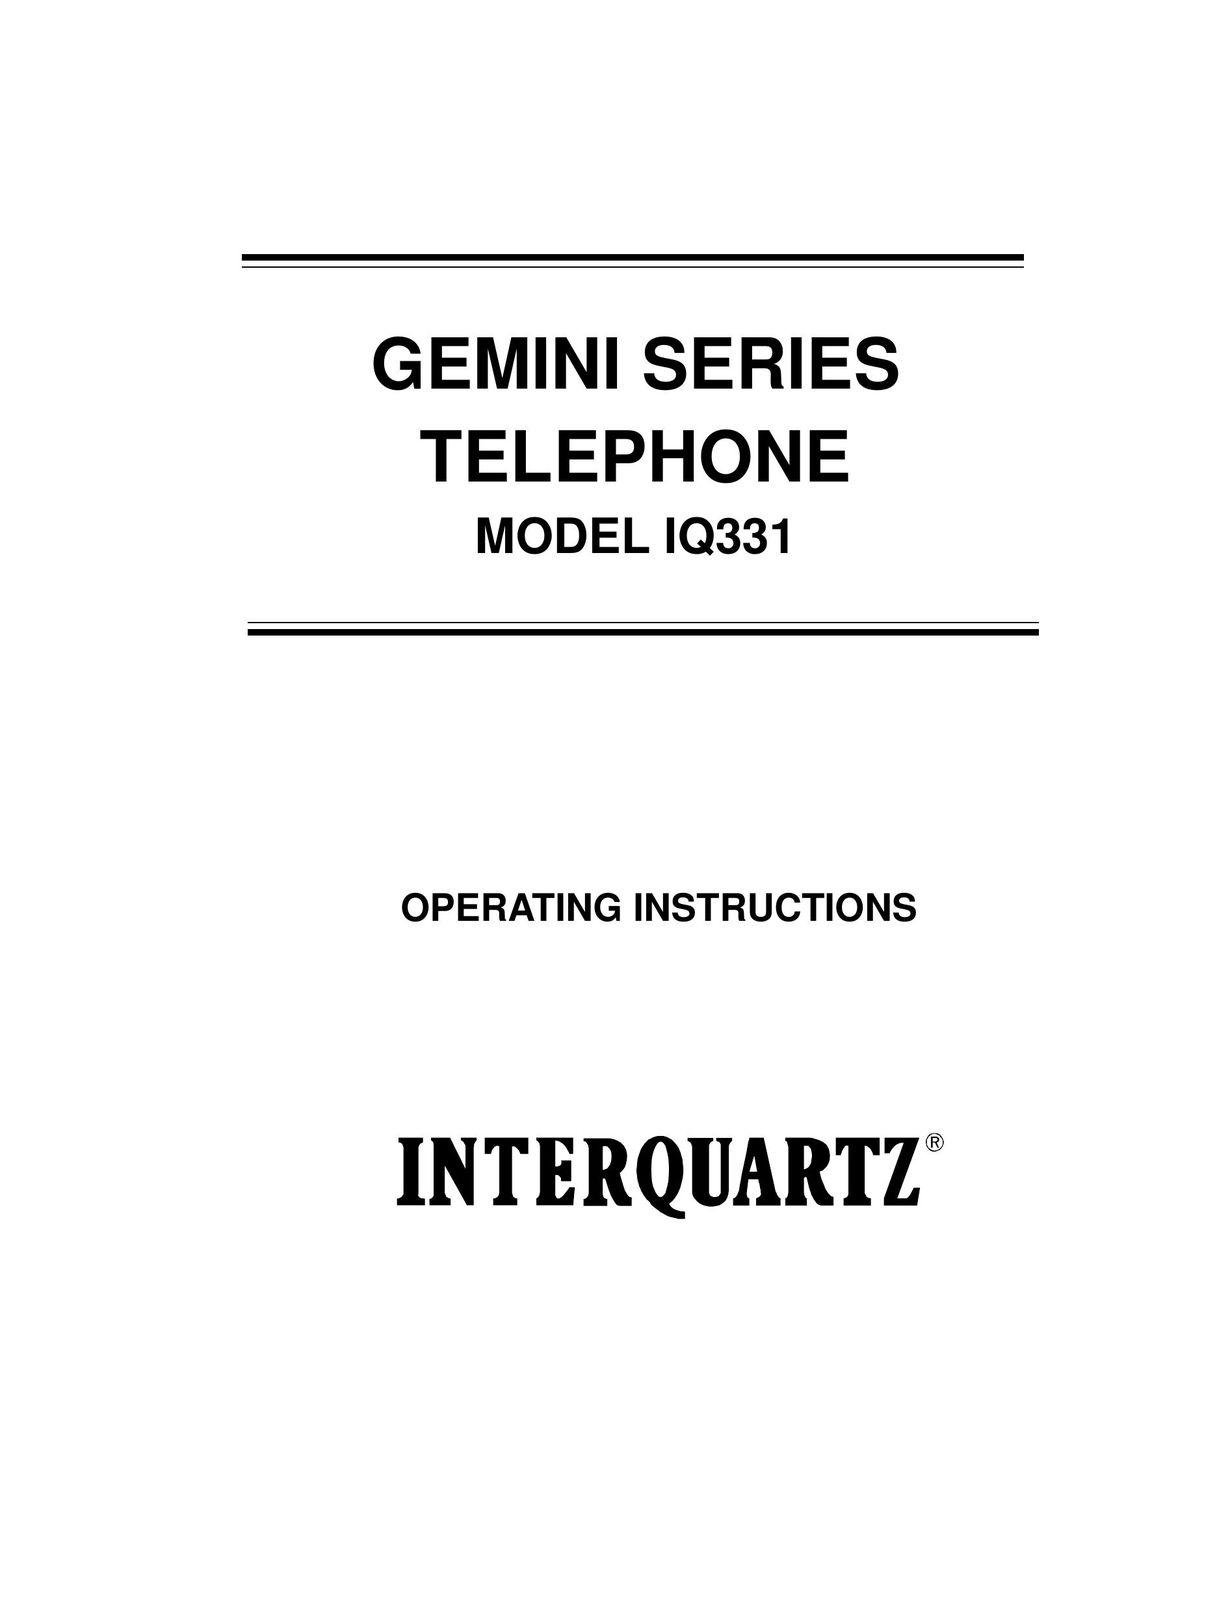 Interquartz IQ331 Telephone User Manual